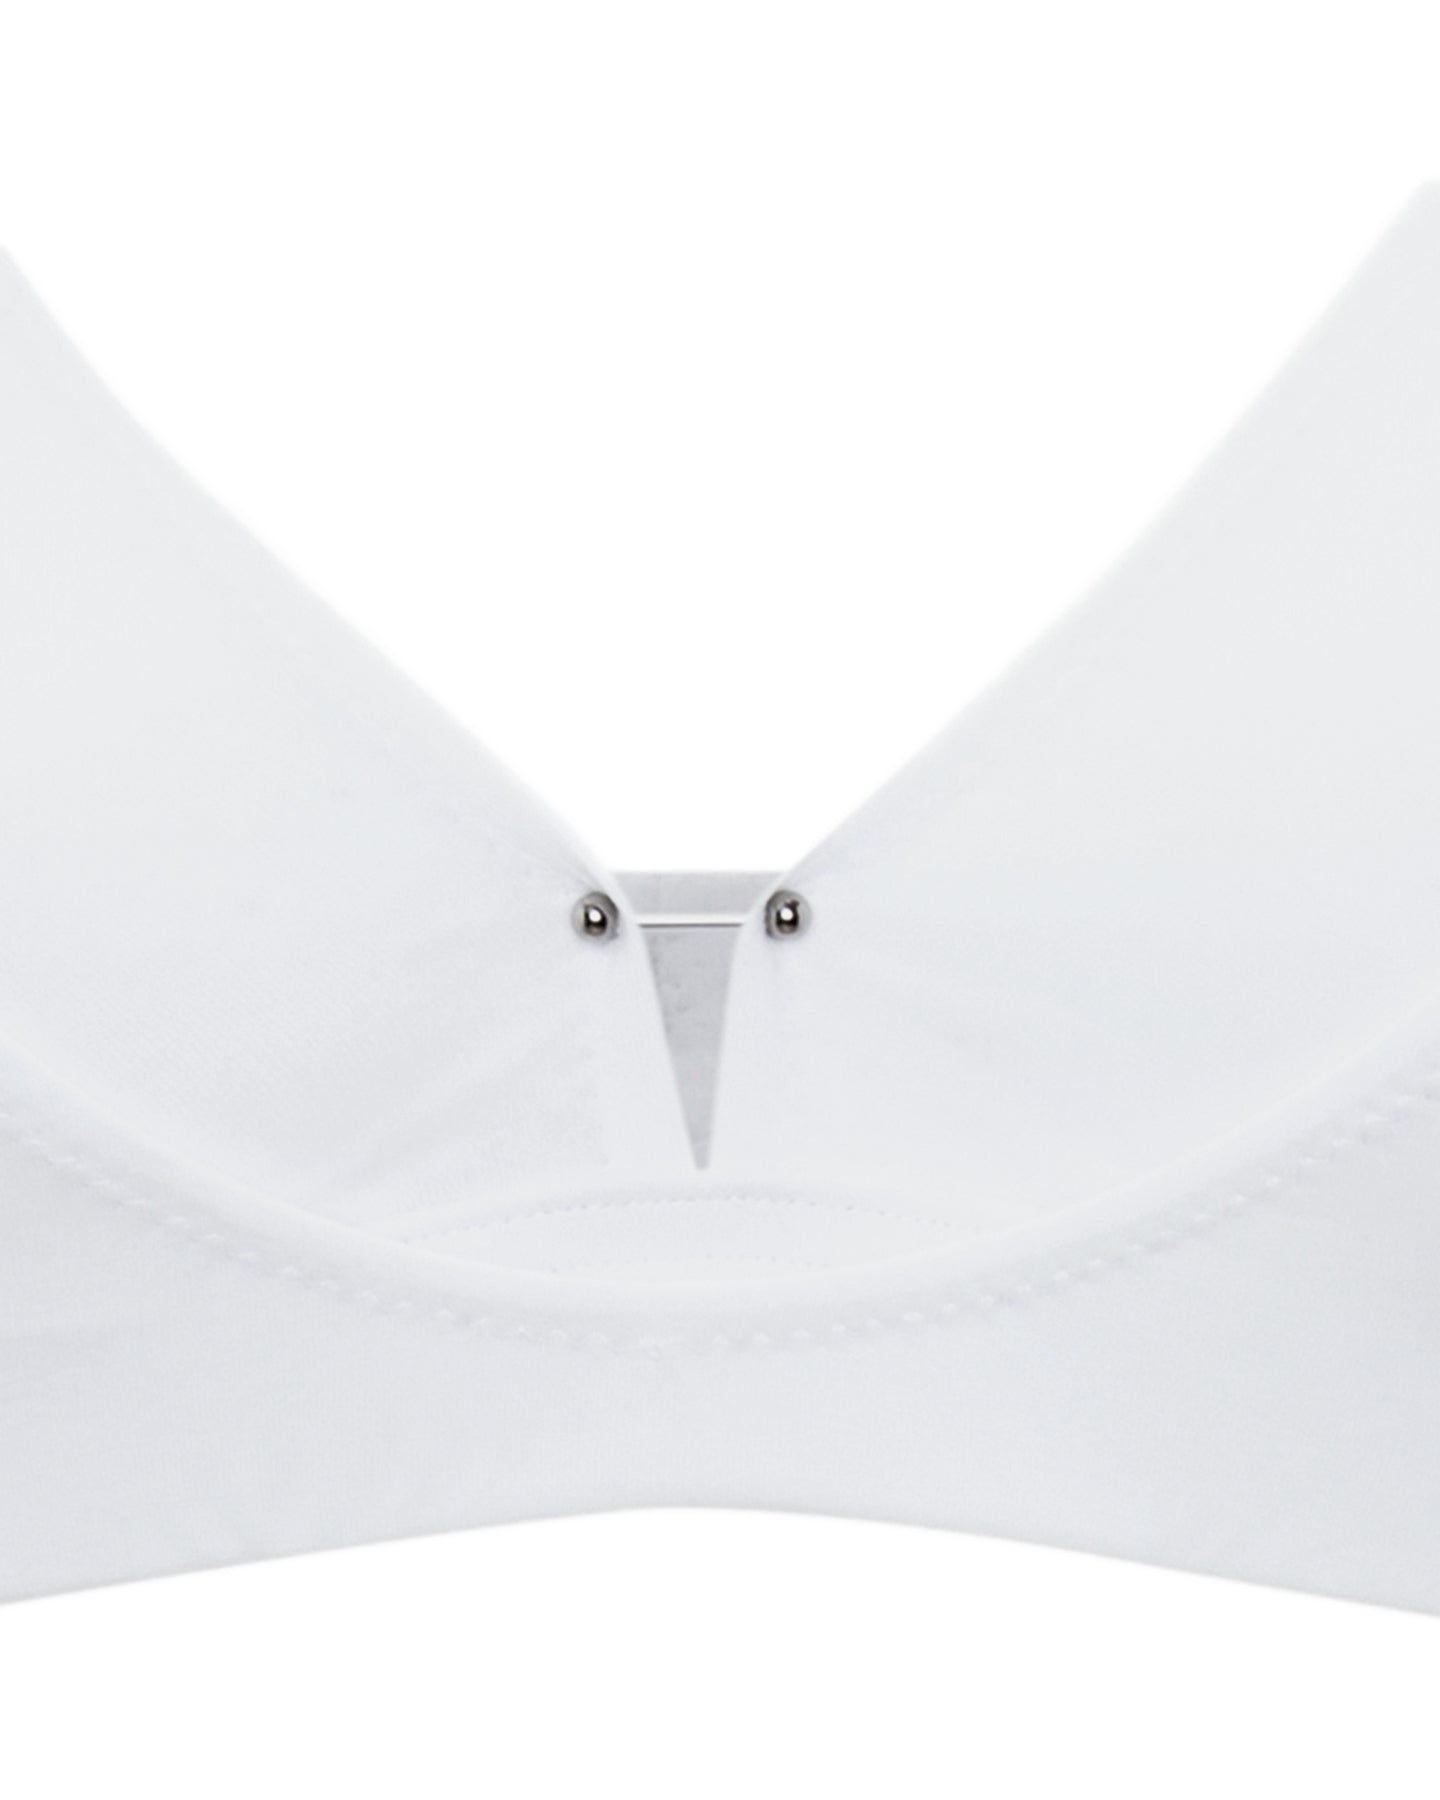 Issy White Organic Cotton Wireless Bra for Women Triangle Bralette Top, Bras